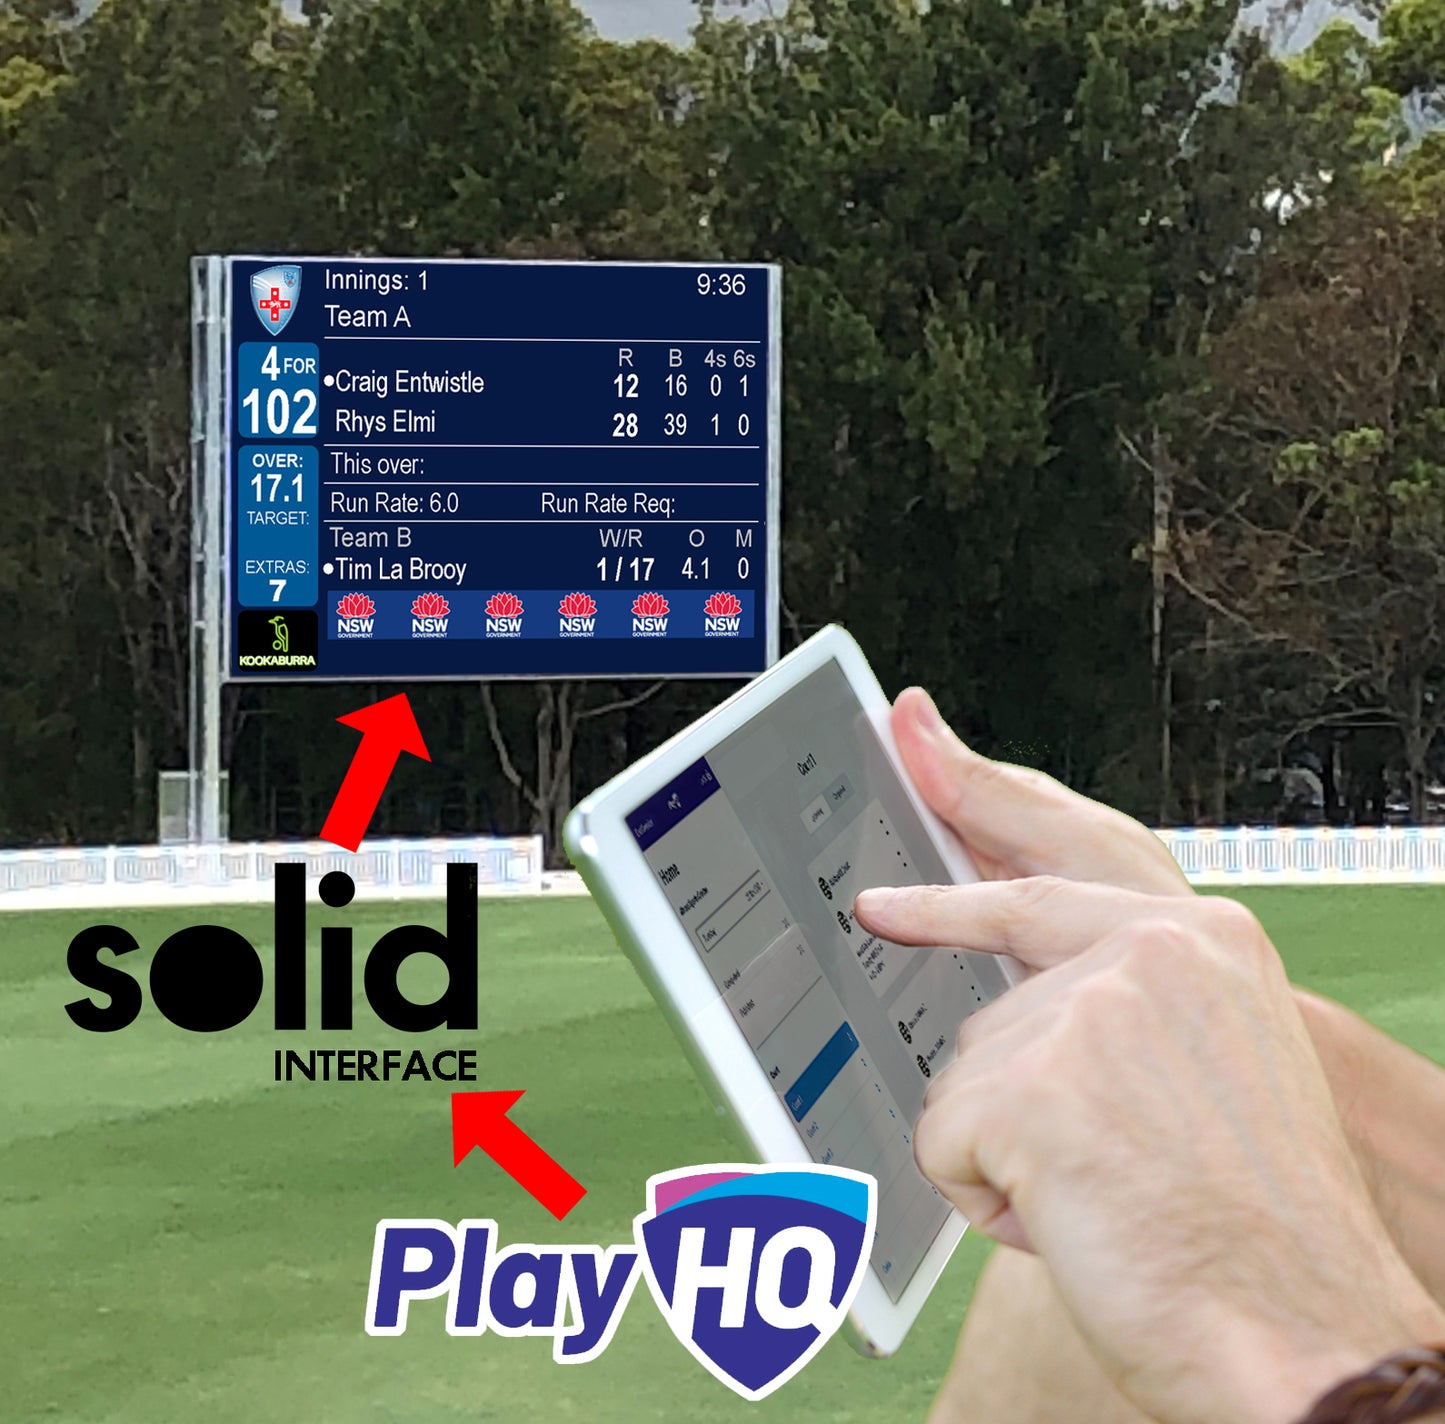 PlayHQ with RemoteApp scoring - season subscription options